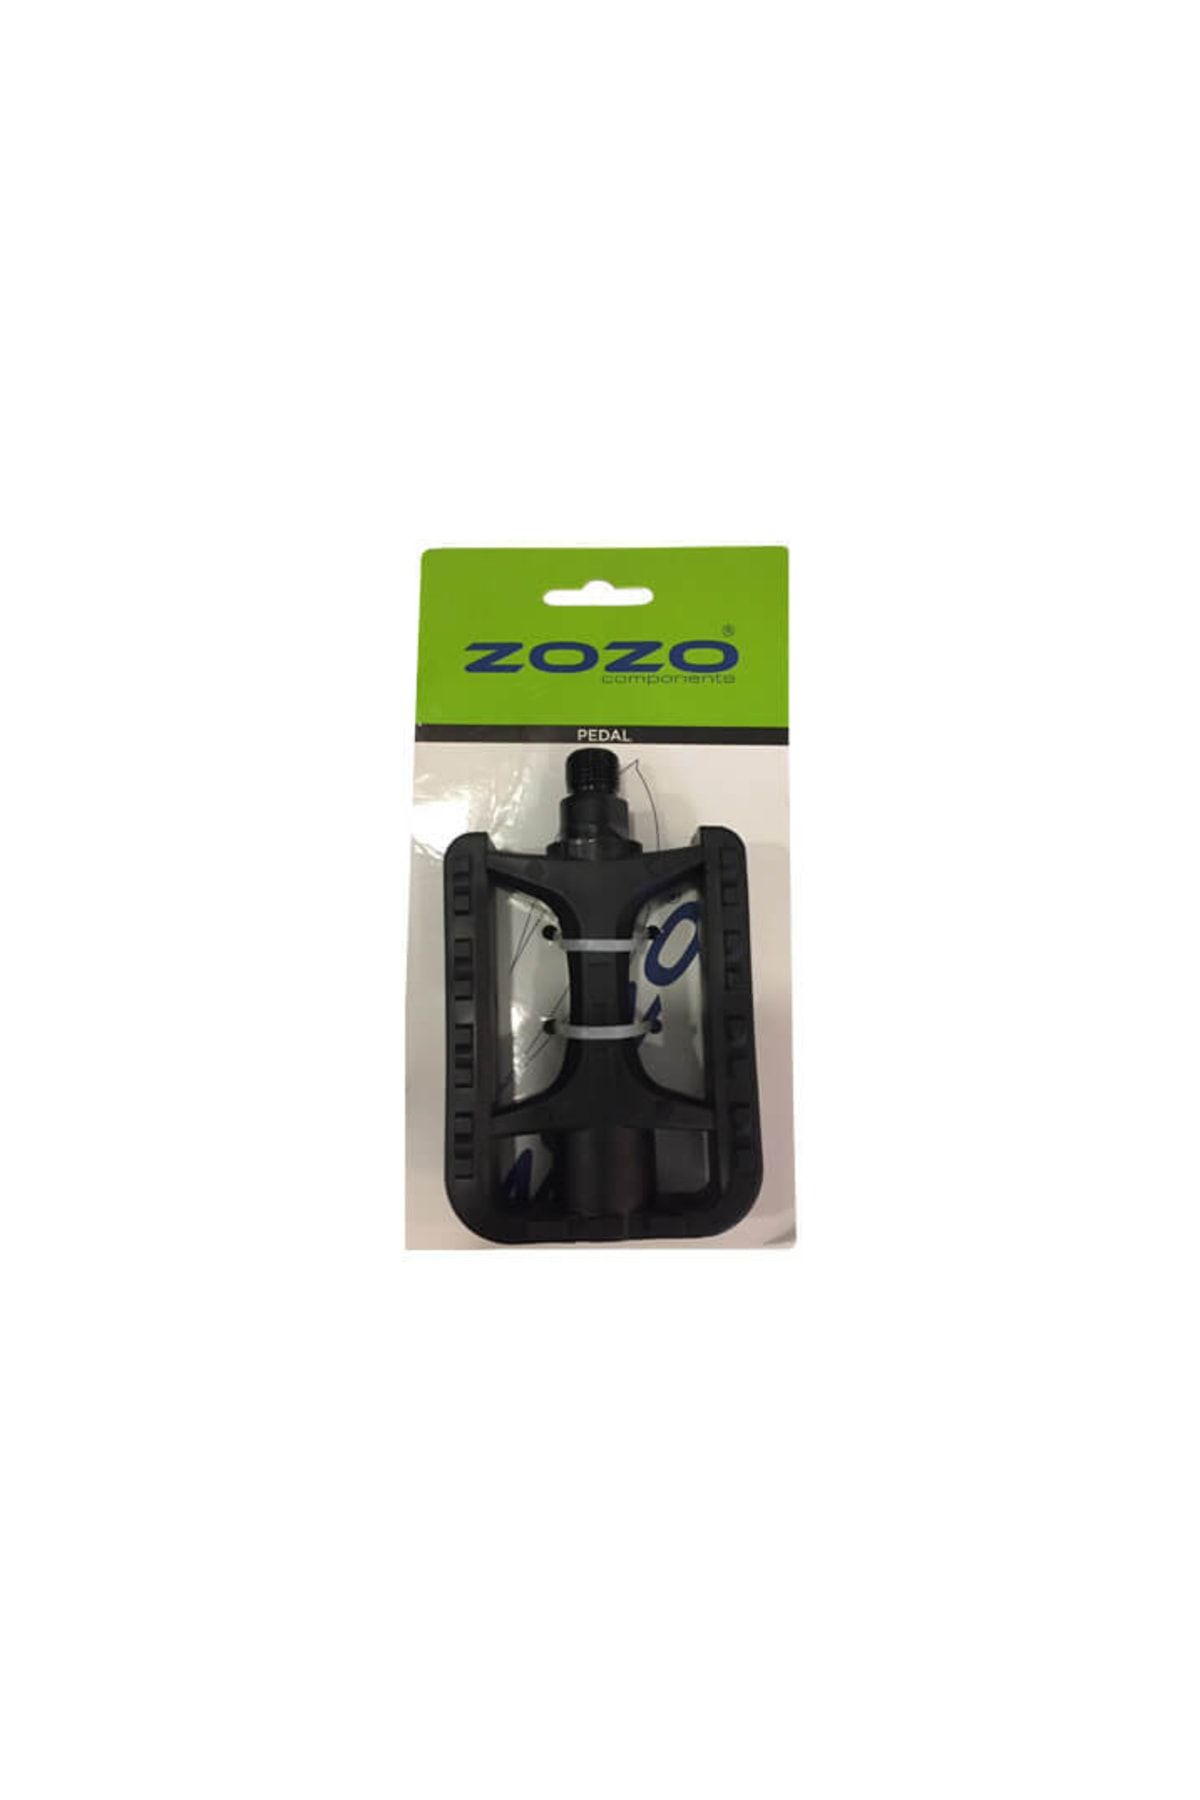 Zozo Fp-804 Plastik Bisiklet Pedalı Bilyalı Siyah 9/16 Standart